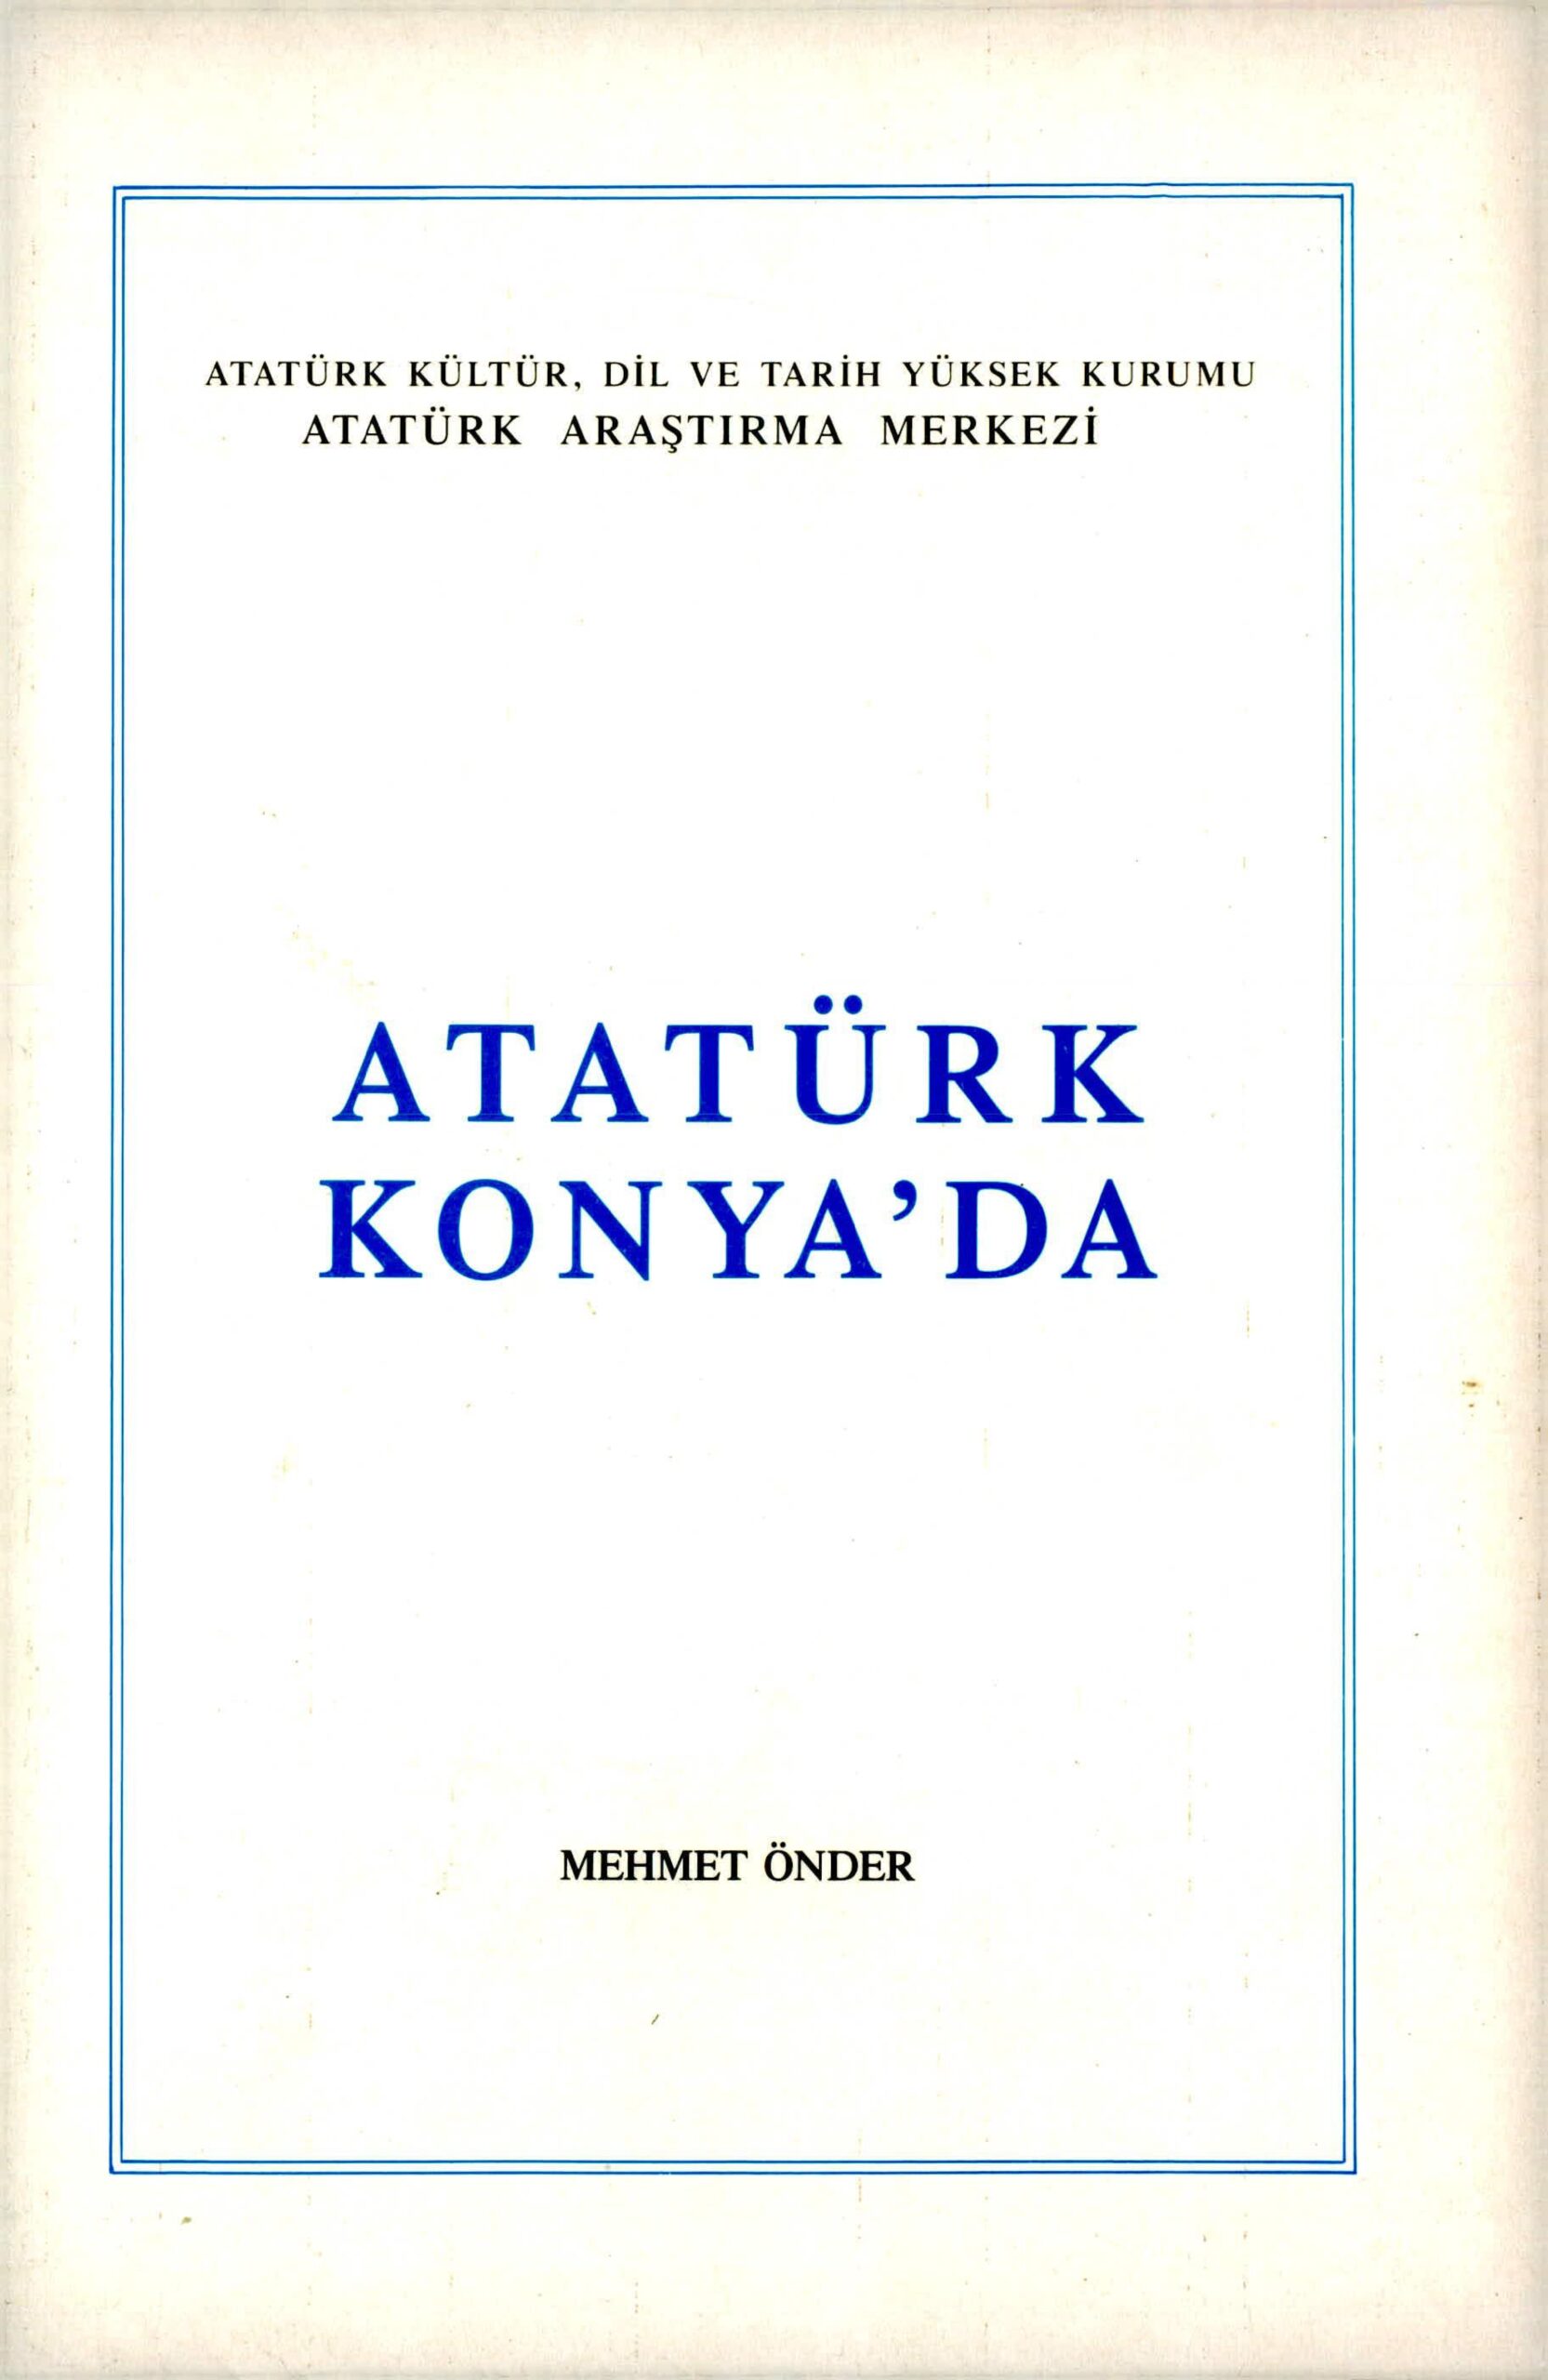 Atatürk Konya’da